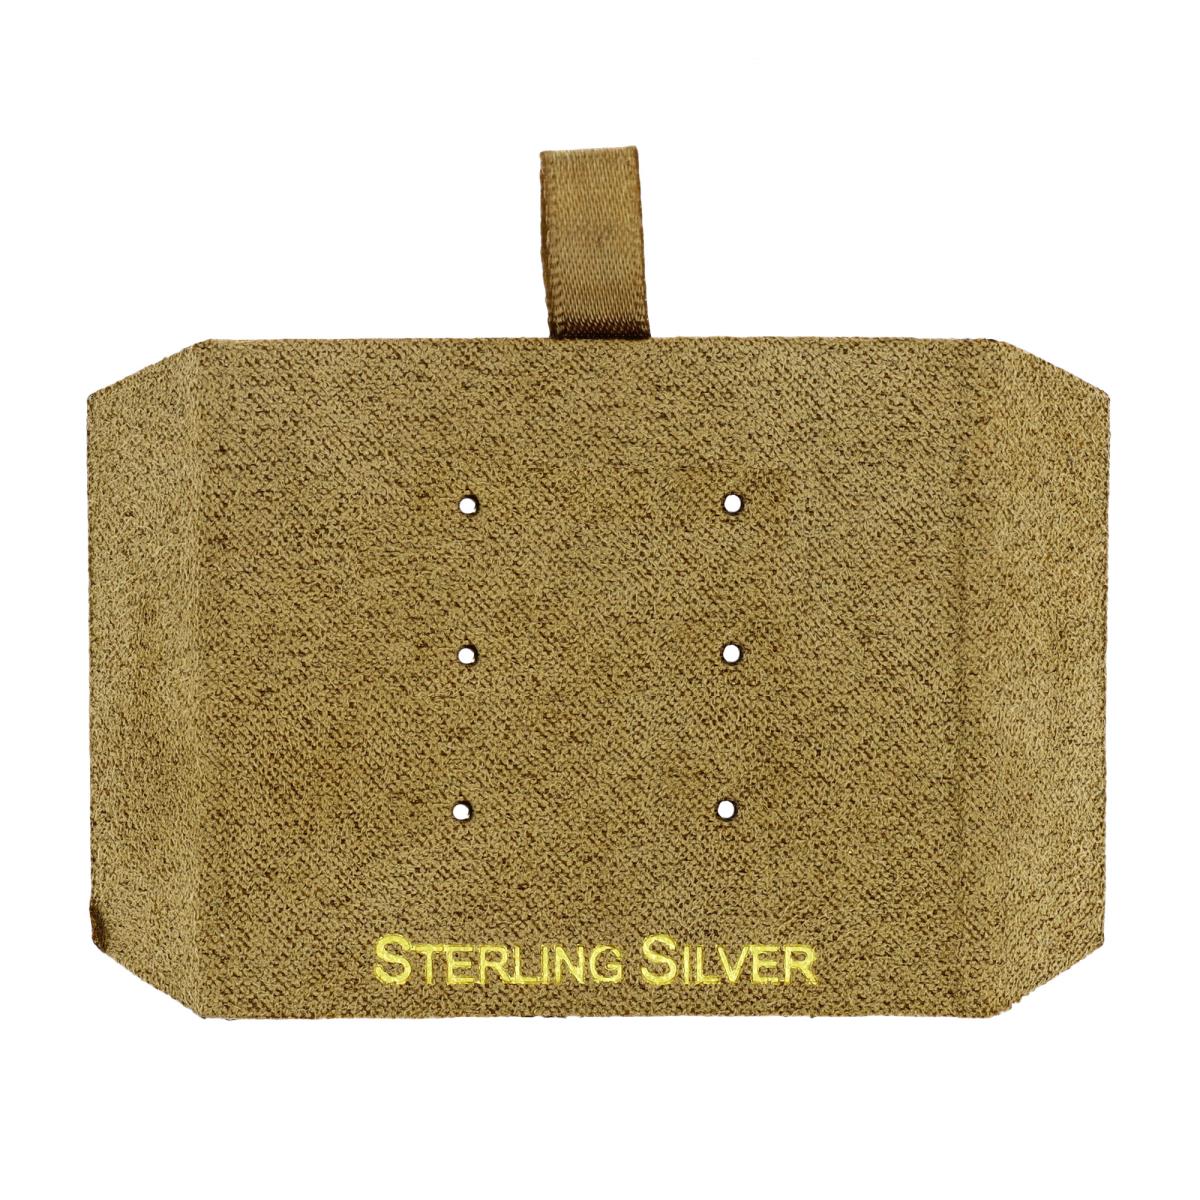 Mushroom Sterling Silver, Gold Foil 3 Stud Insert (Box B06-159/Mush/M)